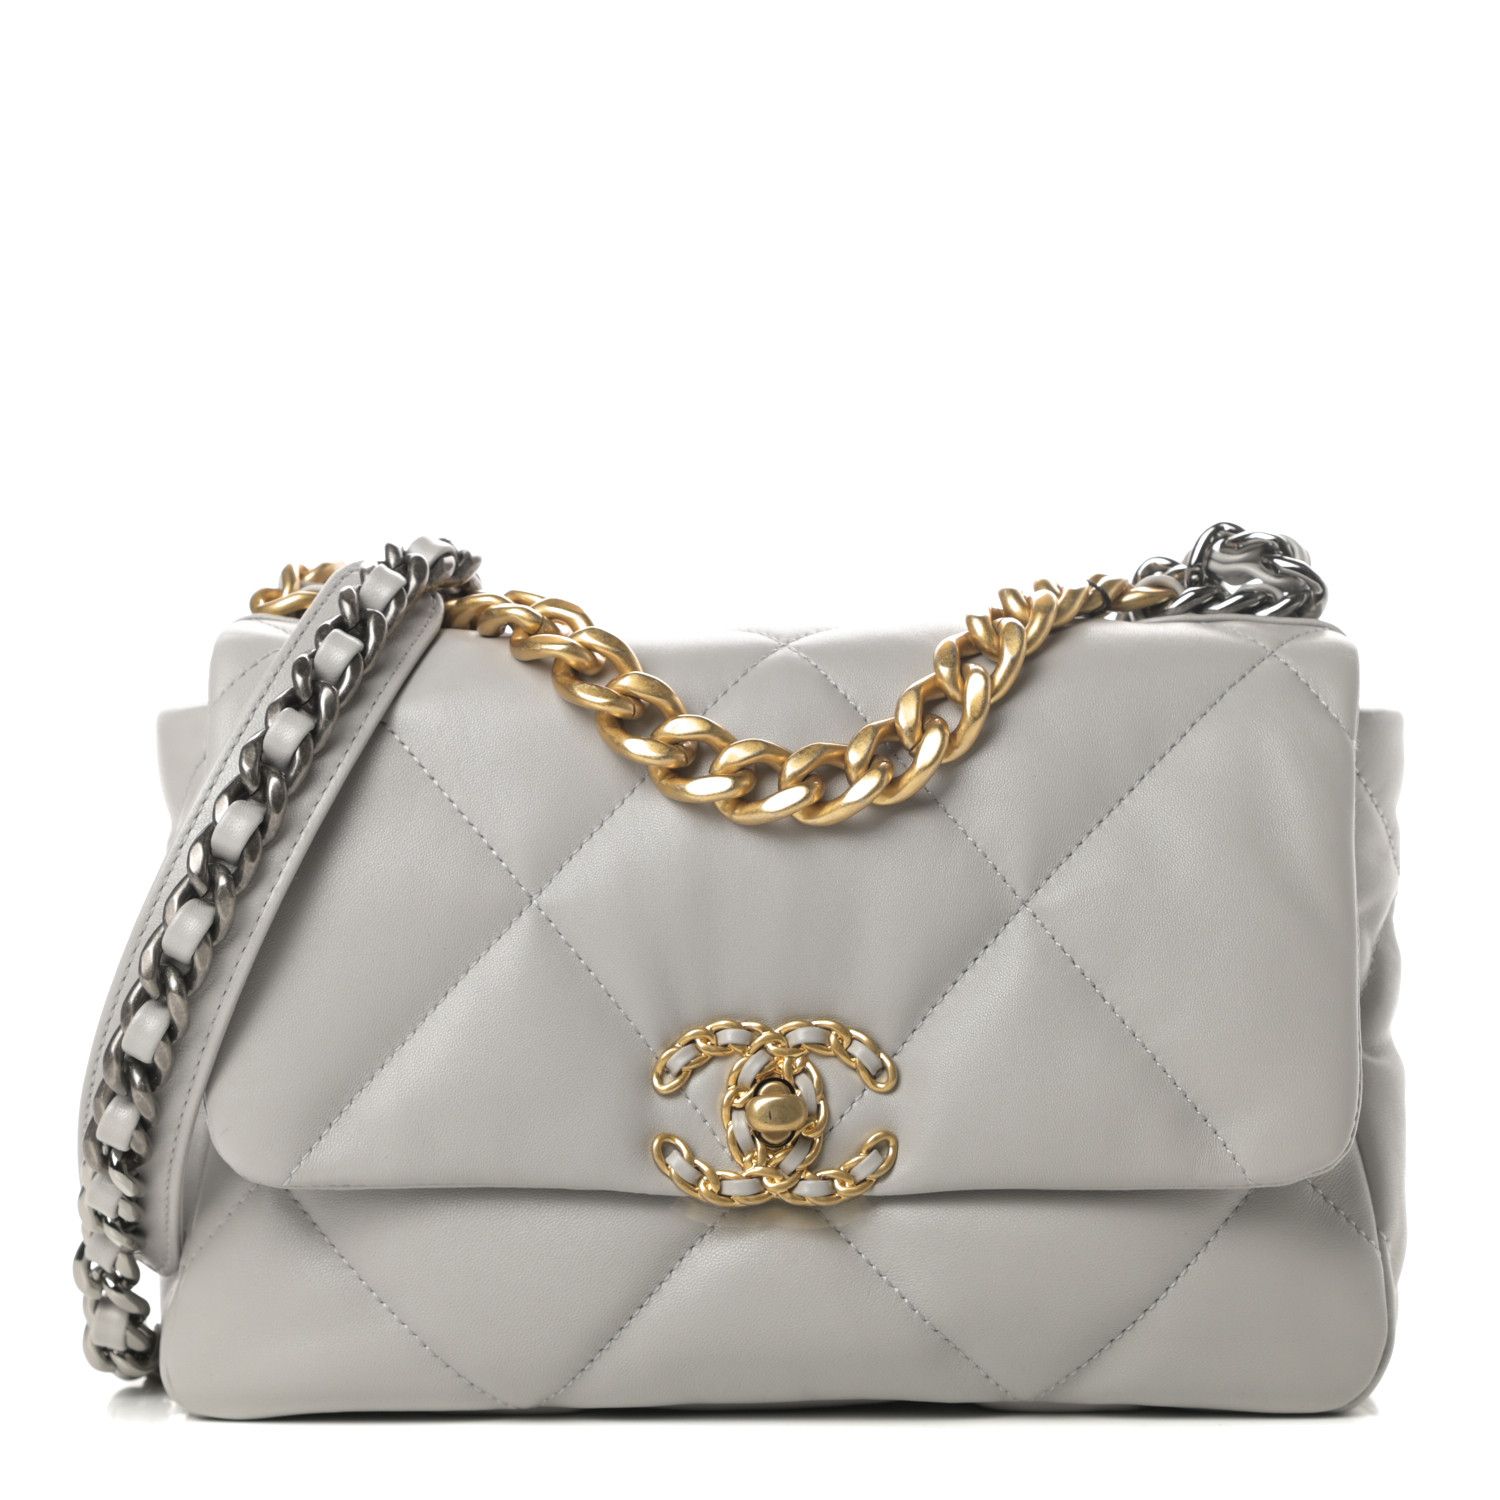 CHANEL

Lambskin Quilted Medium Chanel 19 Flap Grey | Fashionphile